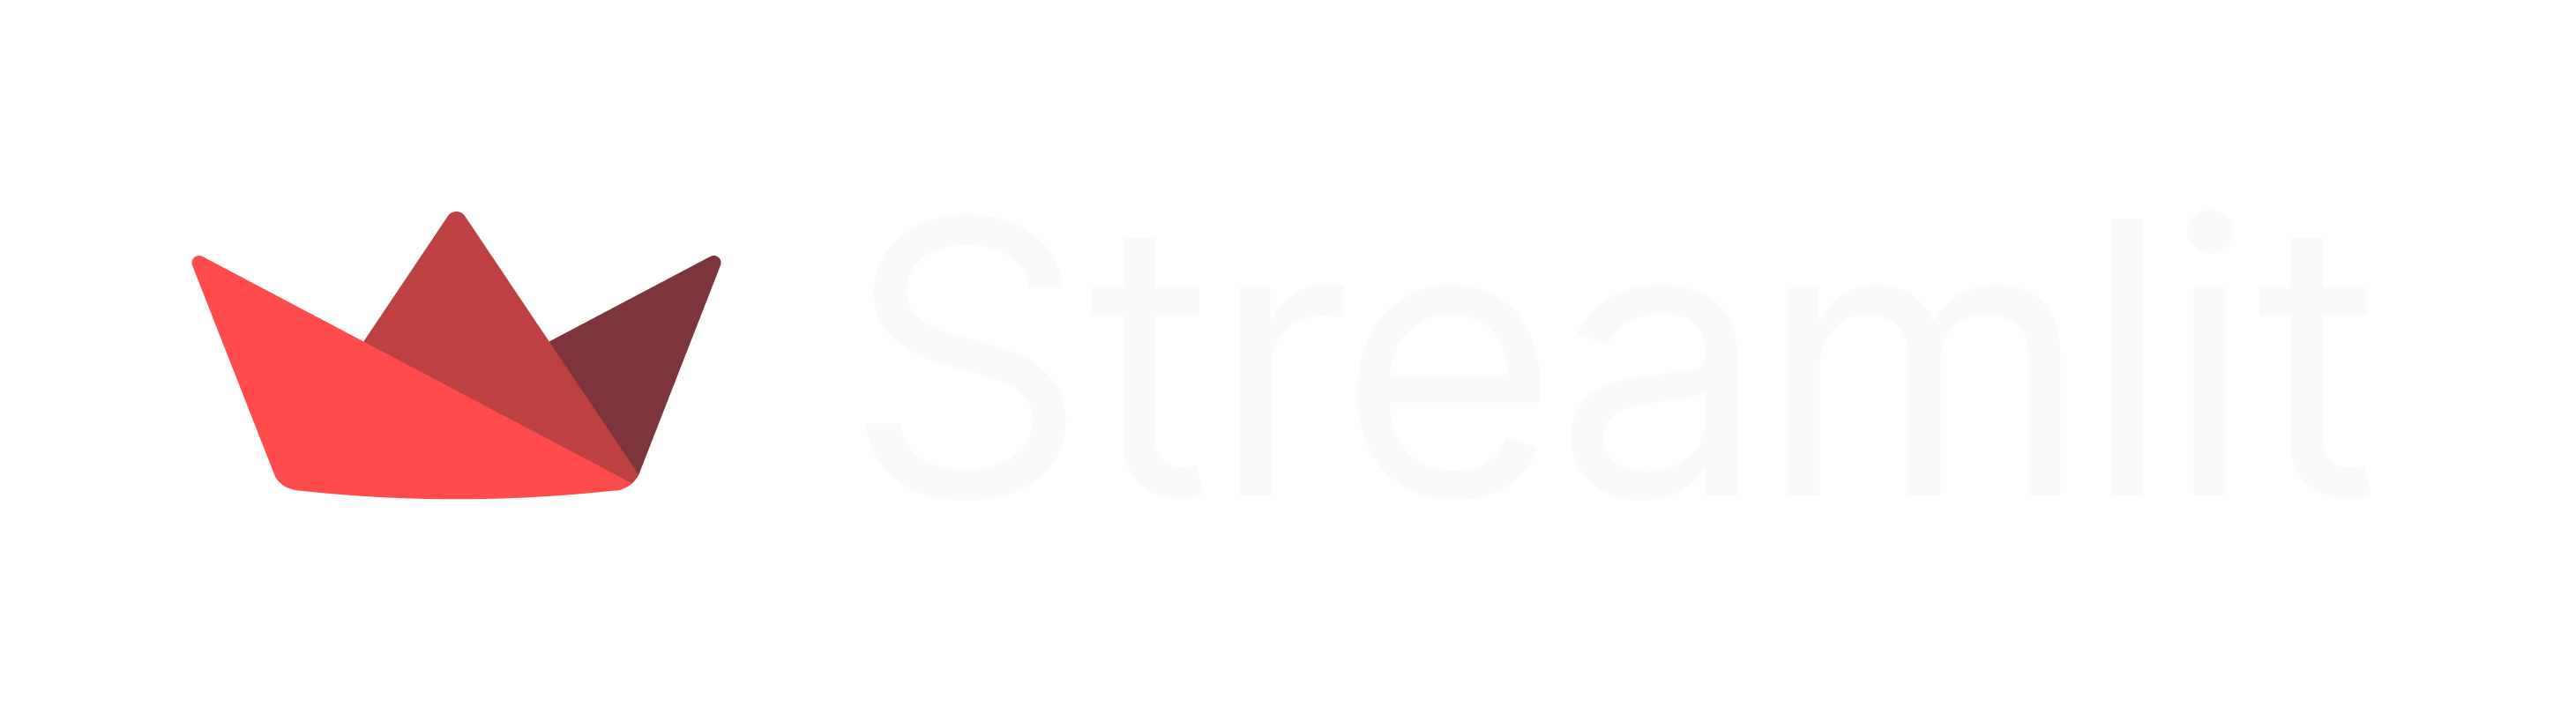 Streamlit horizontal logo on dark background